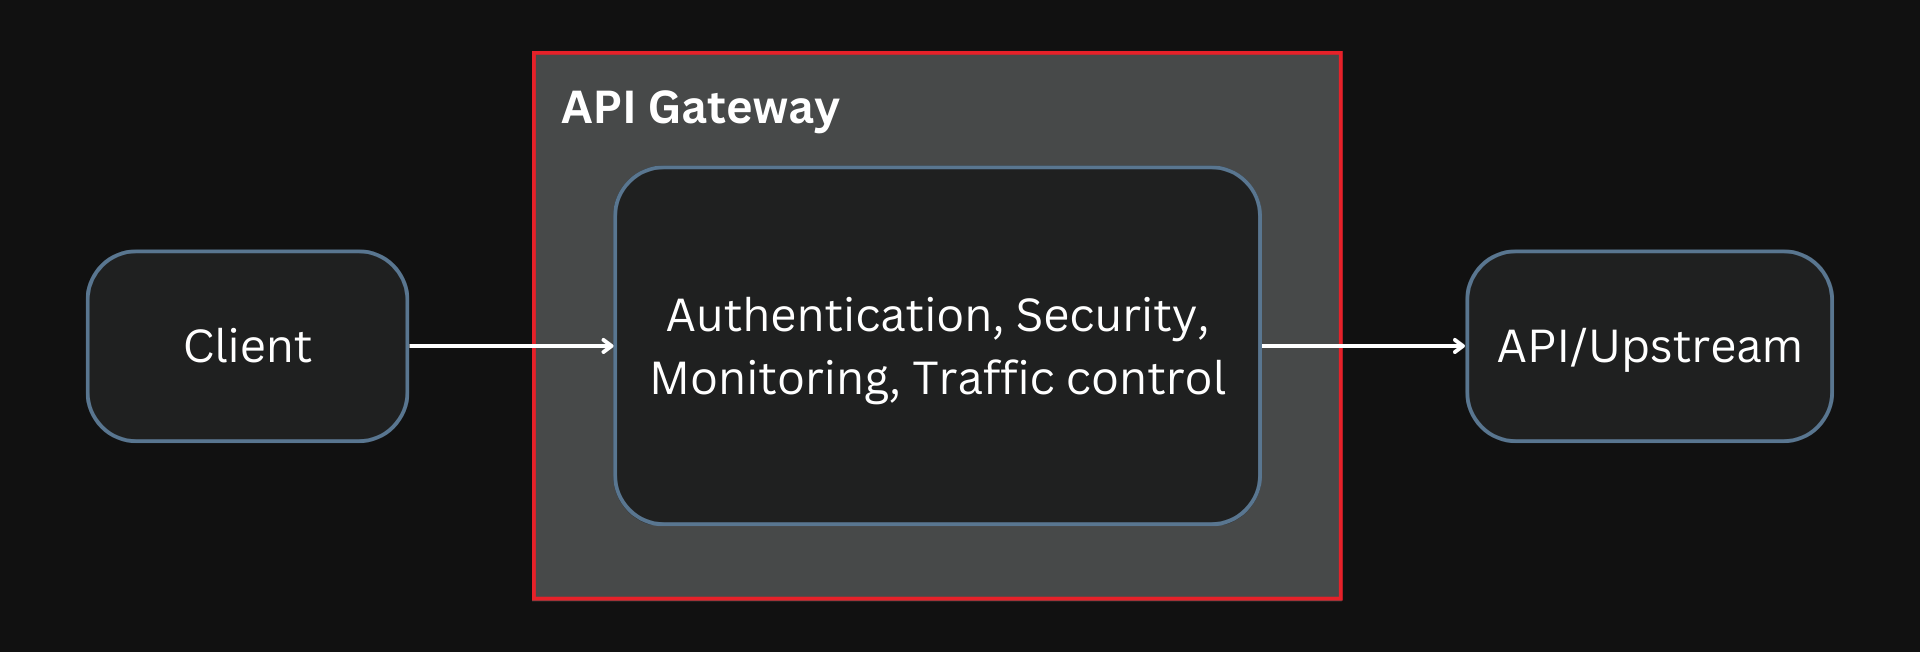 What does an API gateway do?